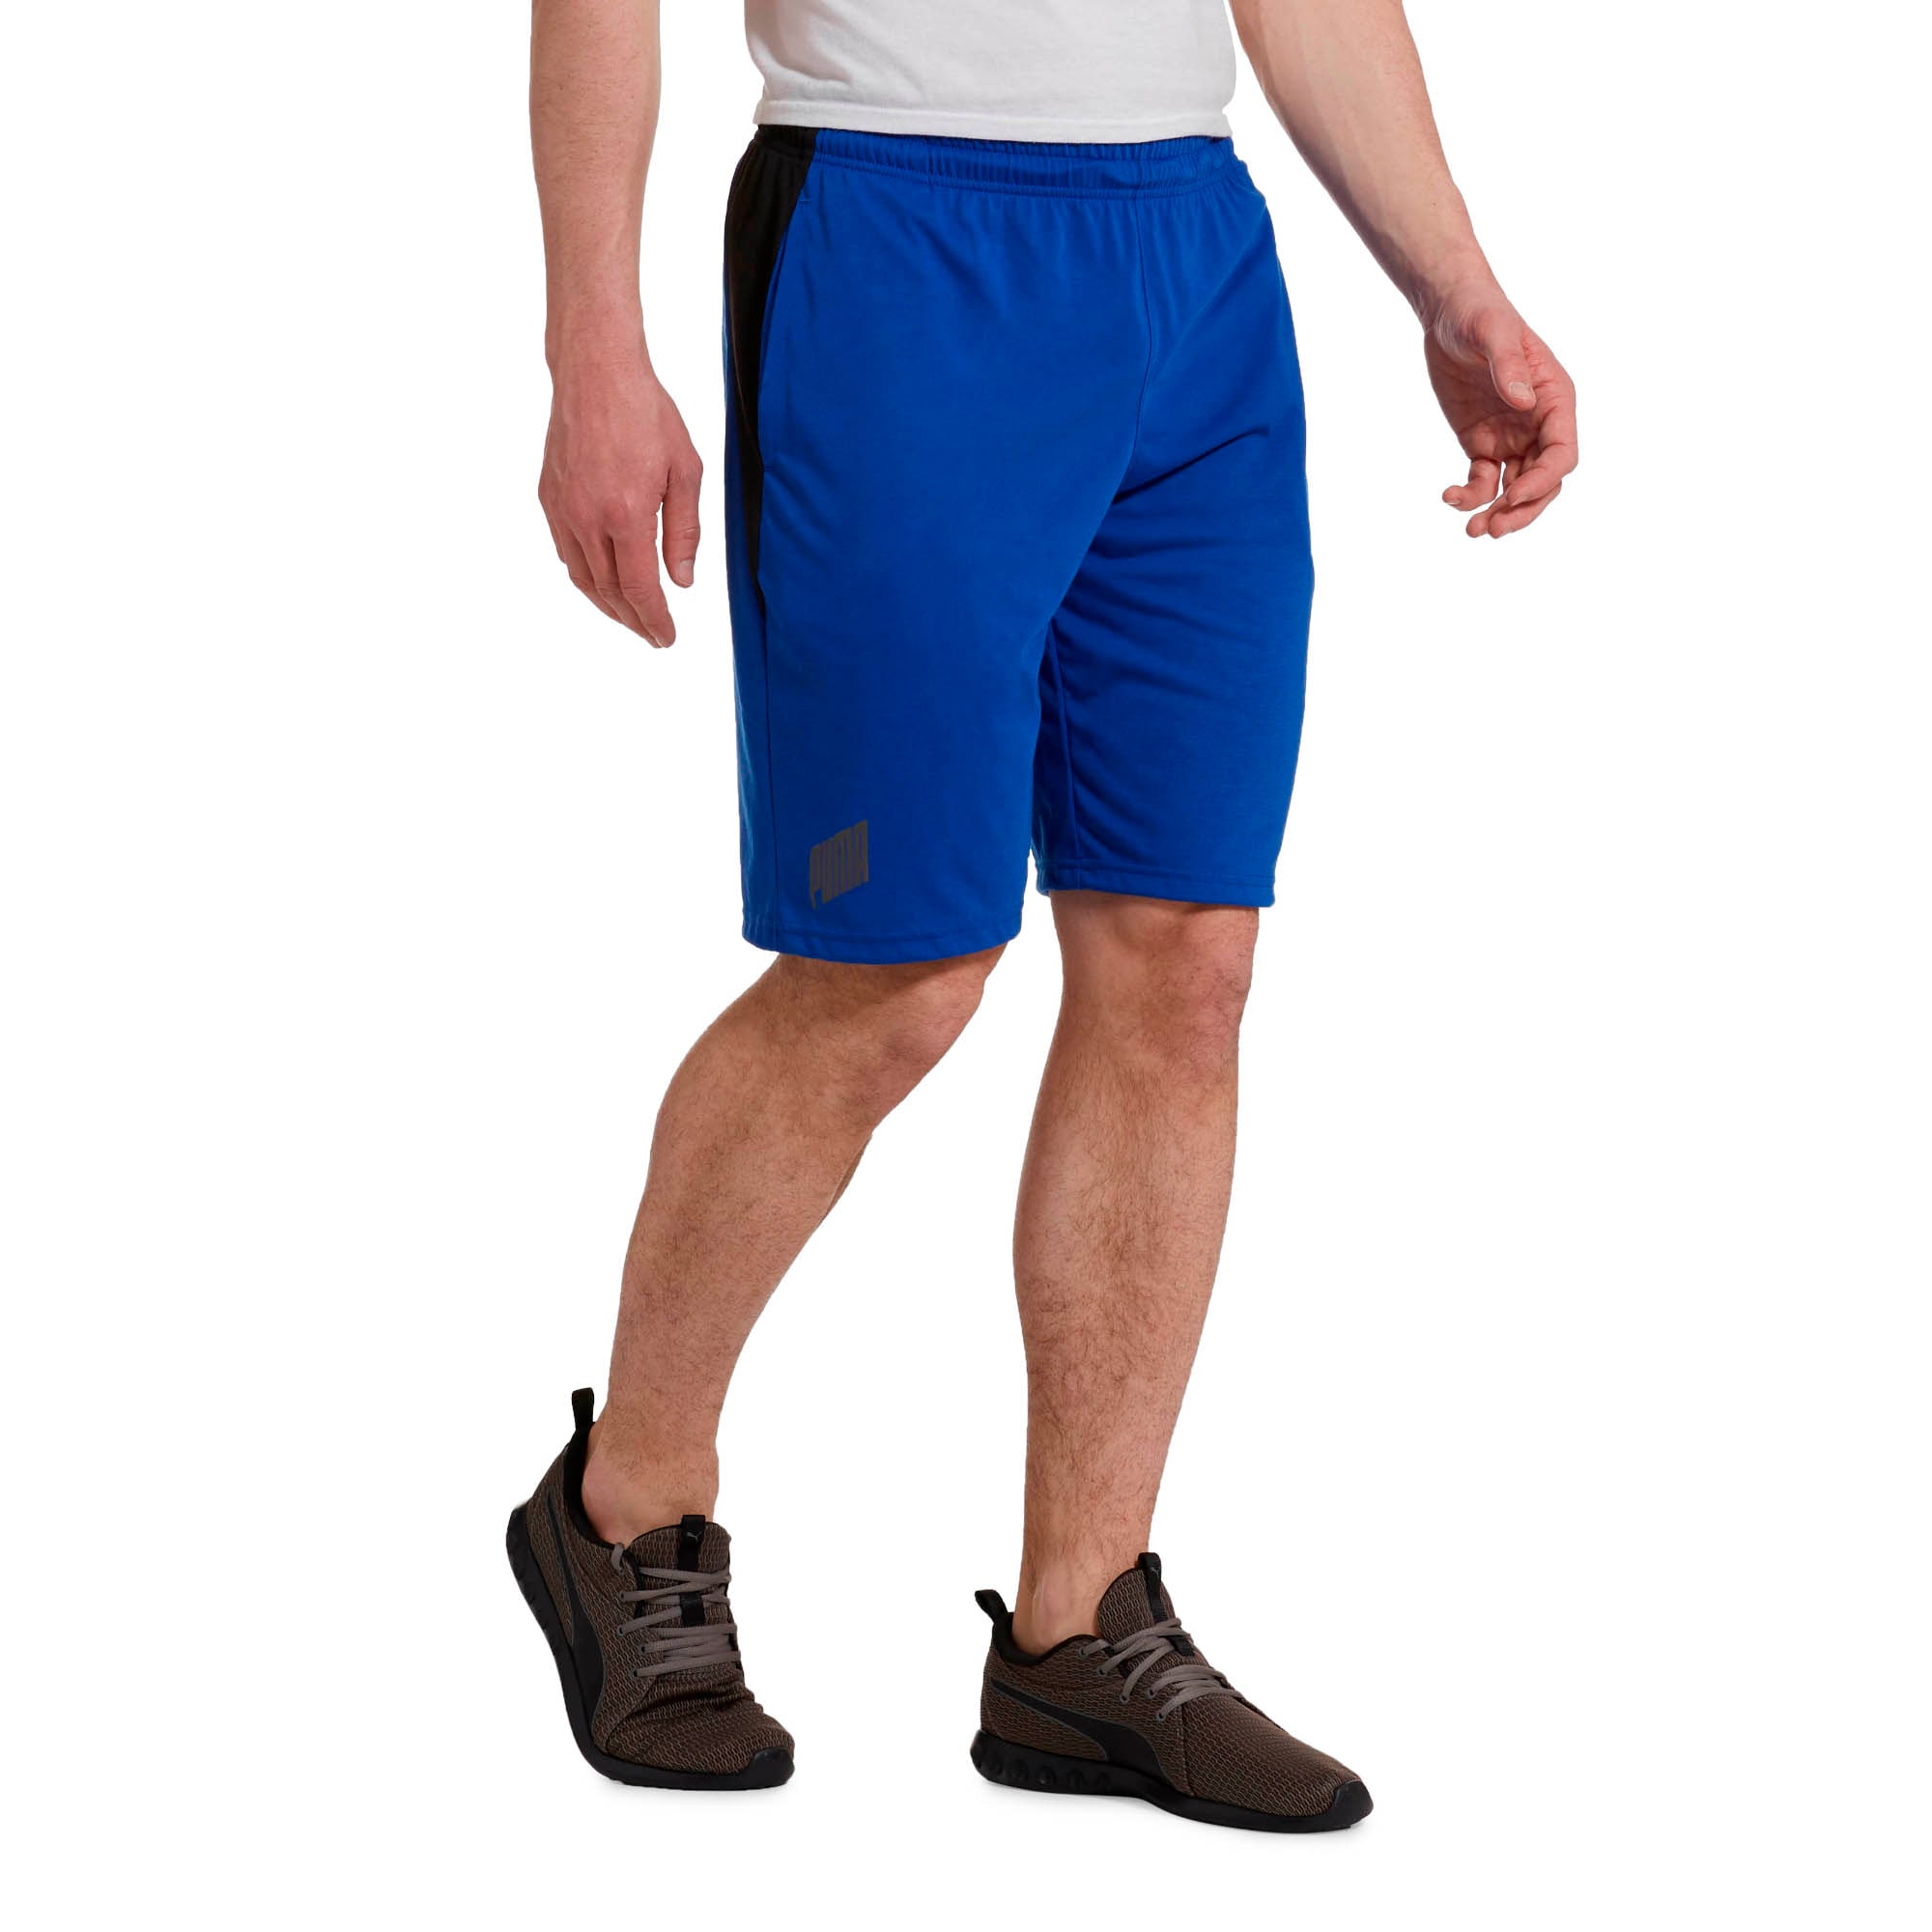 puma cell shorts